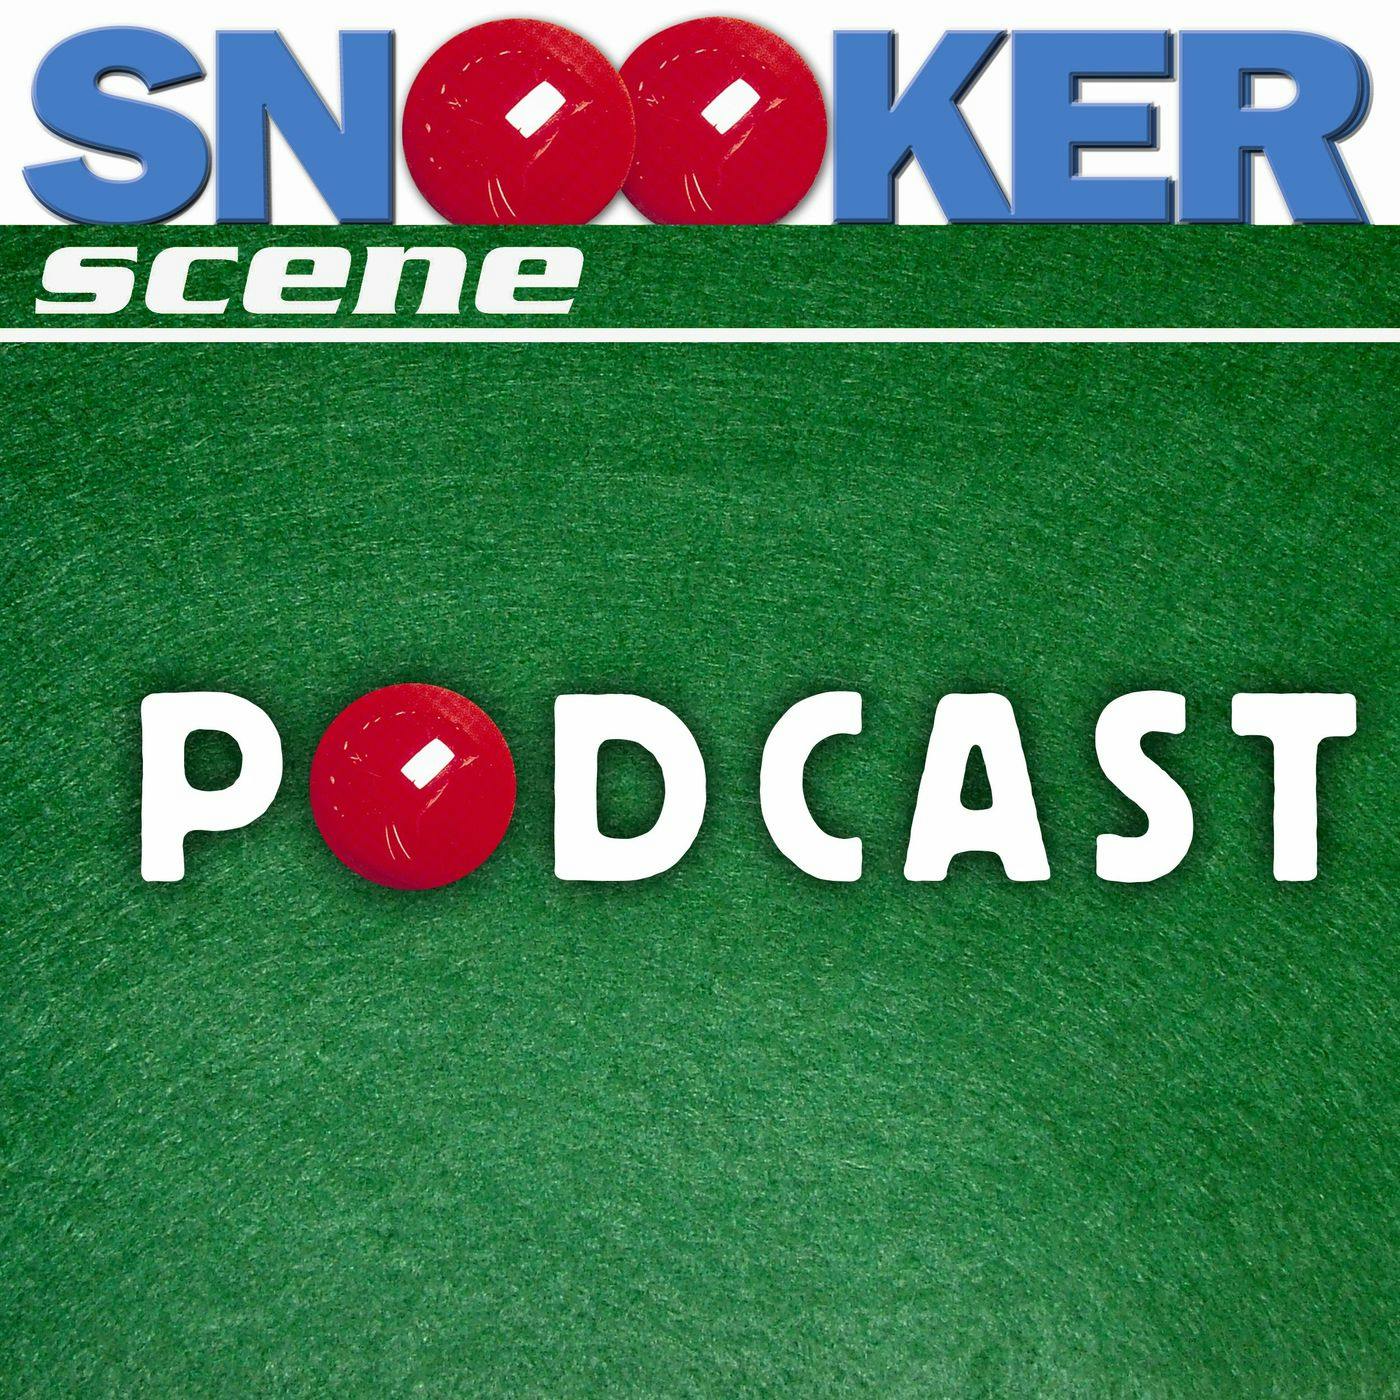 Snooker Scene Podcast episode 129 - The Age of Trump